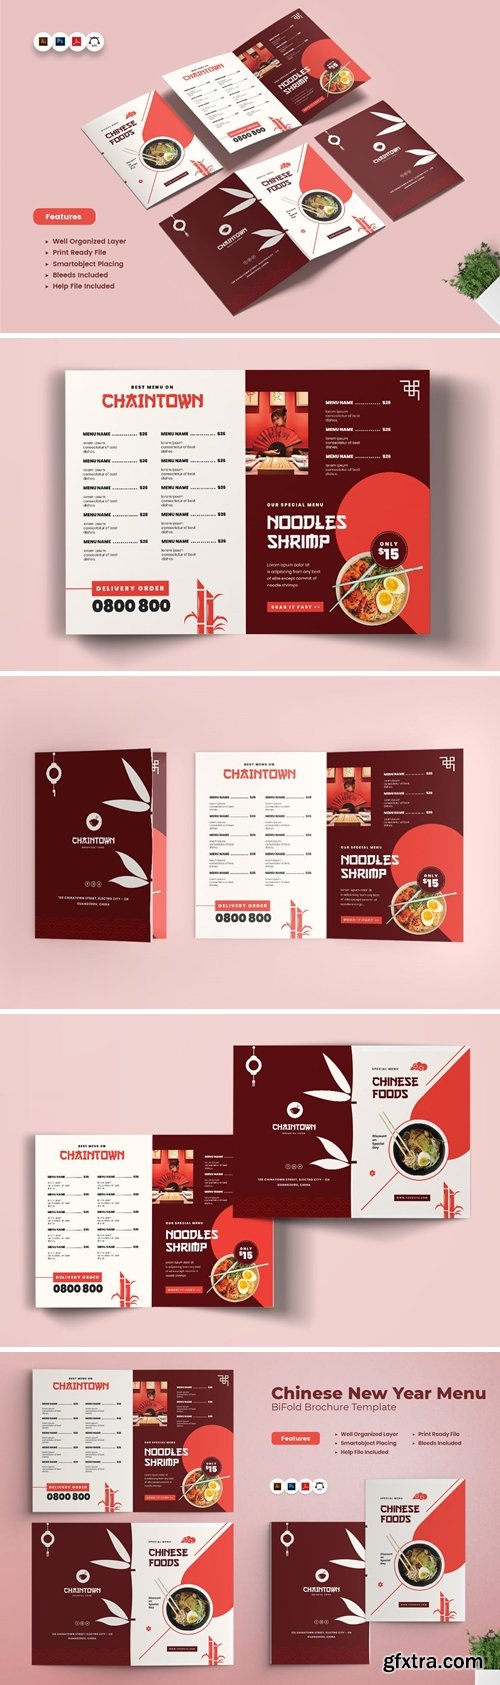 Chinese New Year Menu Bifold Brochure